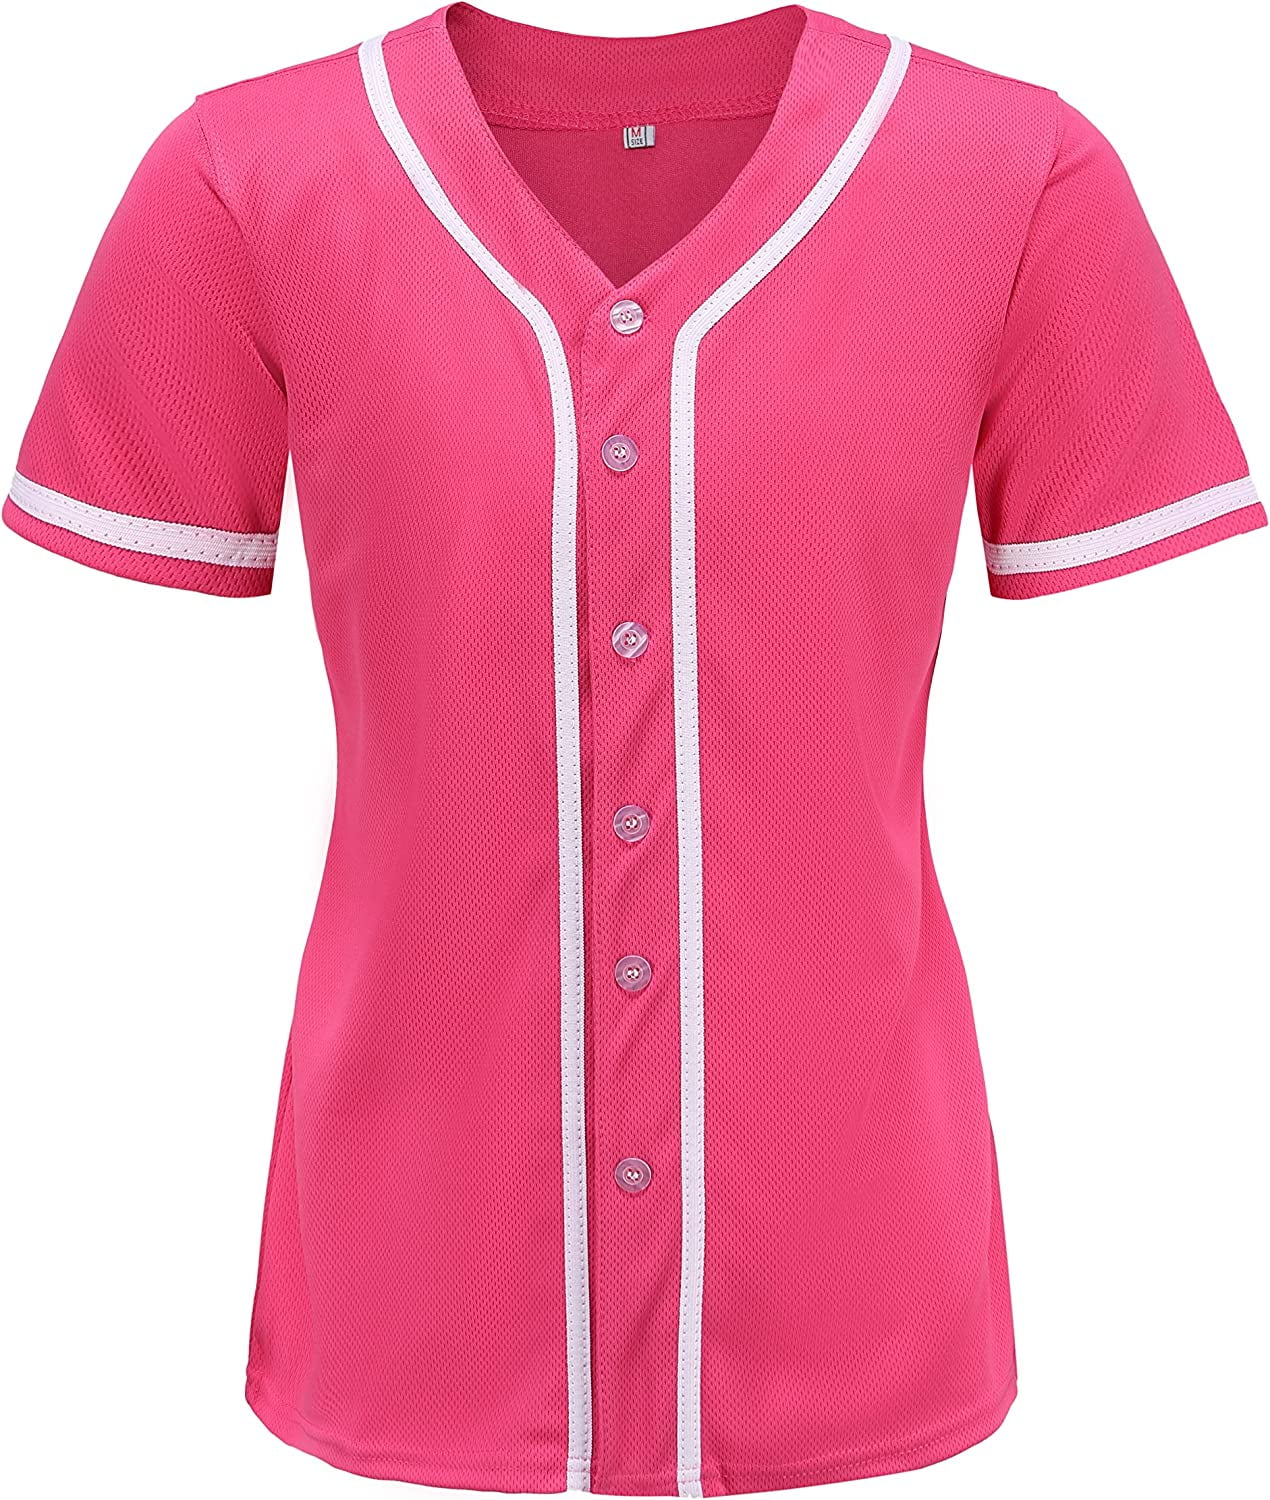  KUAIPAO Blank Baseball Jersey,Short Sleeve Plain Jersey  Shirt,Sports Uniform for Men Women(White, Black, Red,Blue,S-3XL) :  Clothing, Shoes